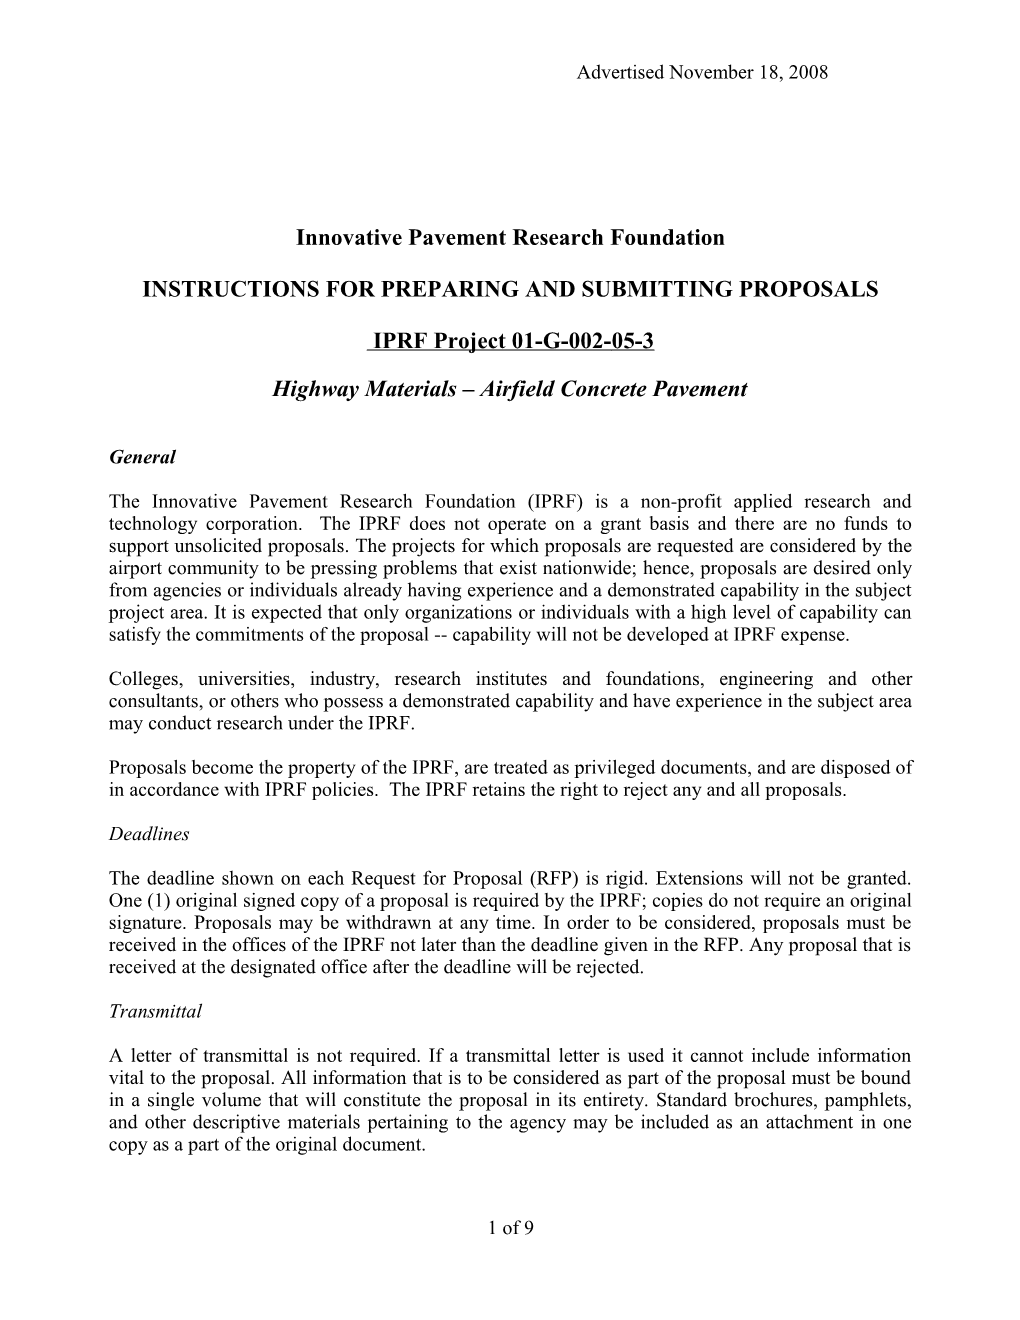 Innovative Pavement Research Foundation (IPRF)